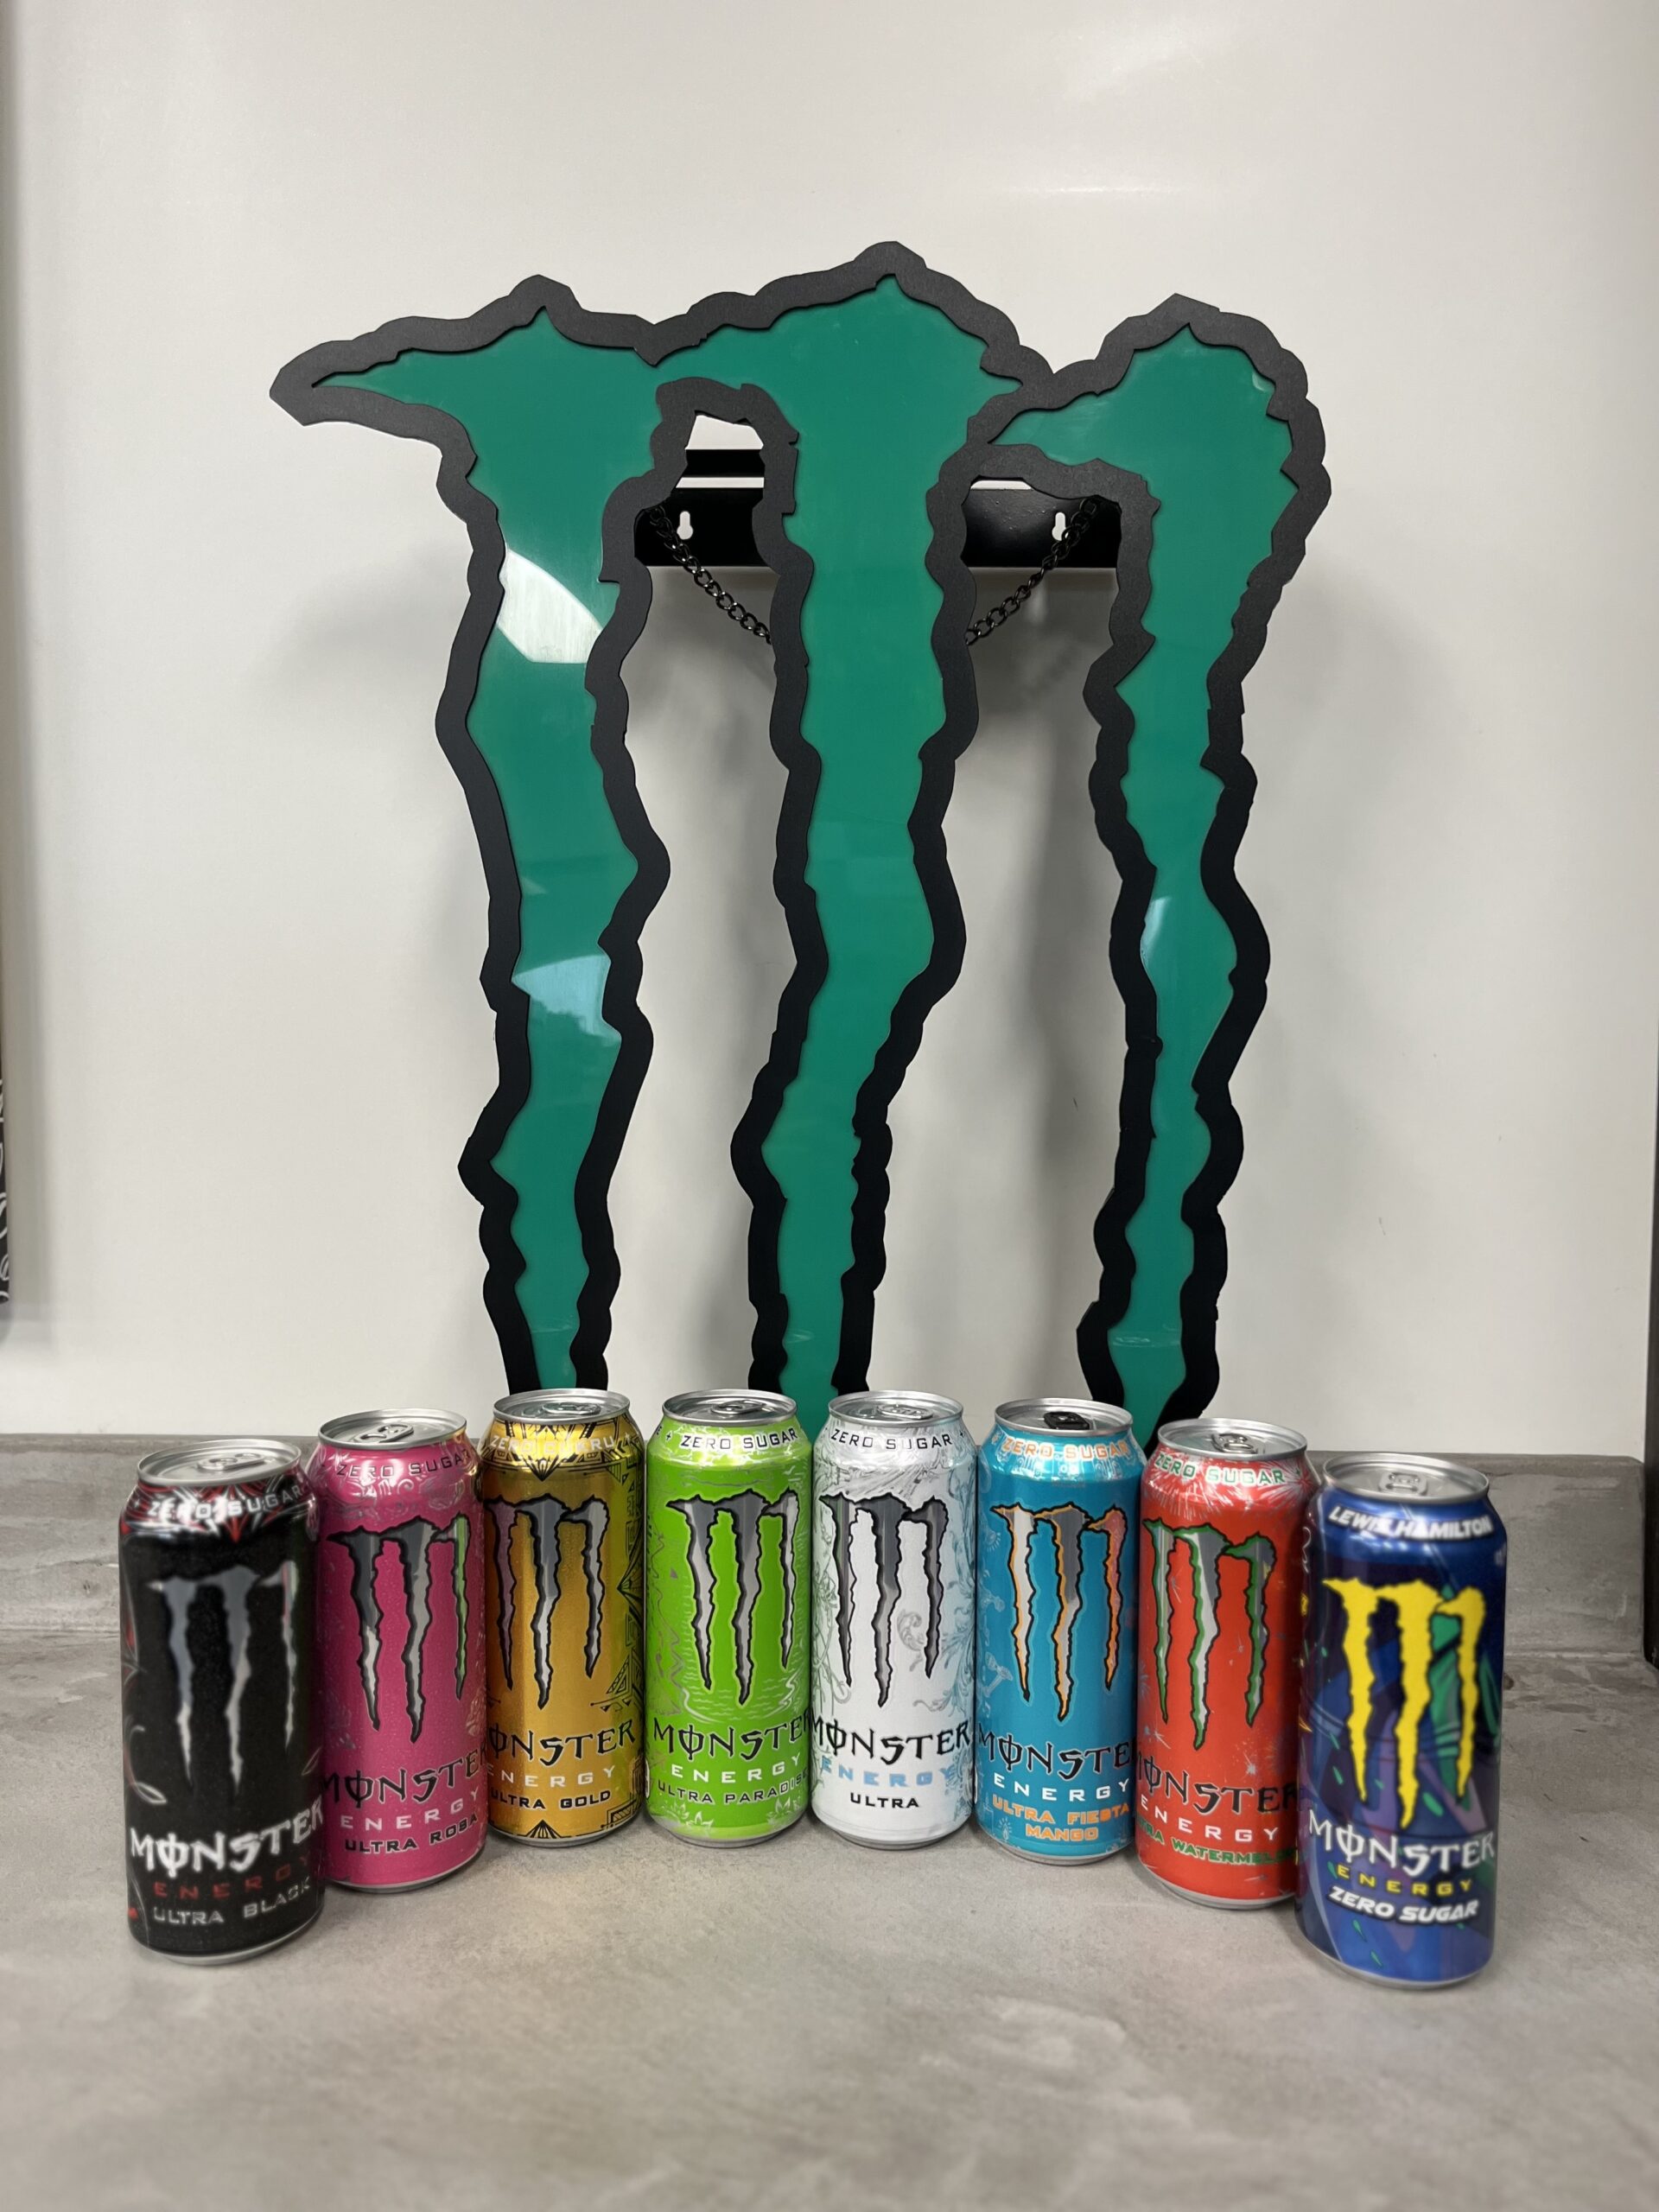 Monster Zero Sugar